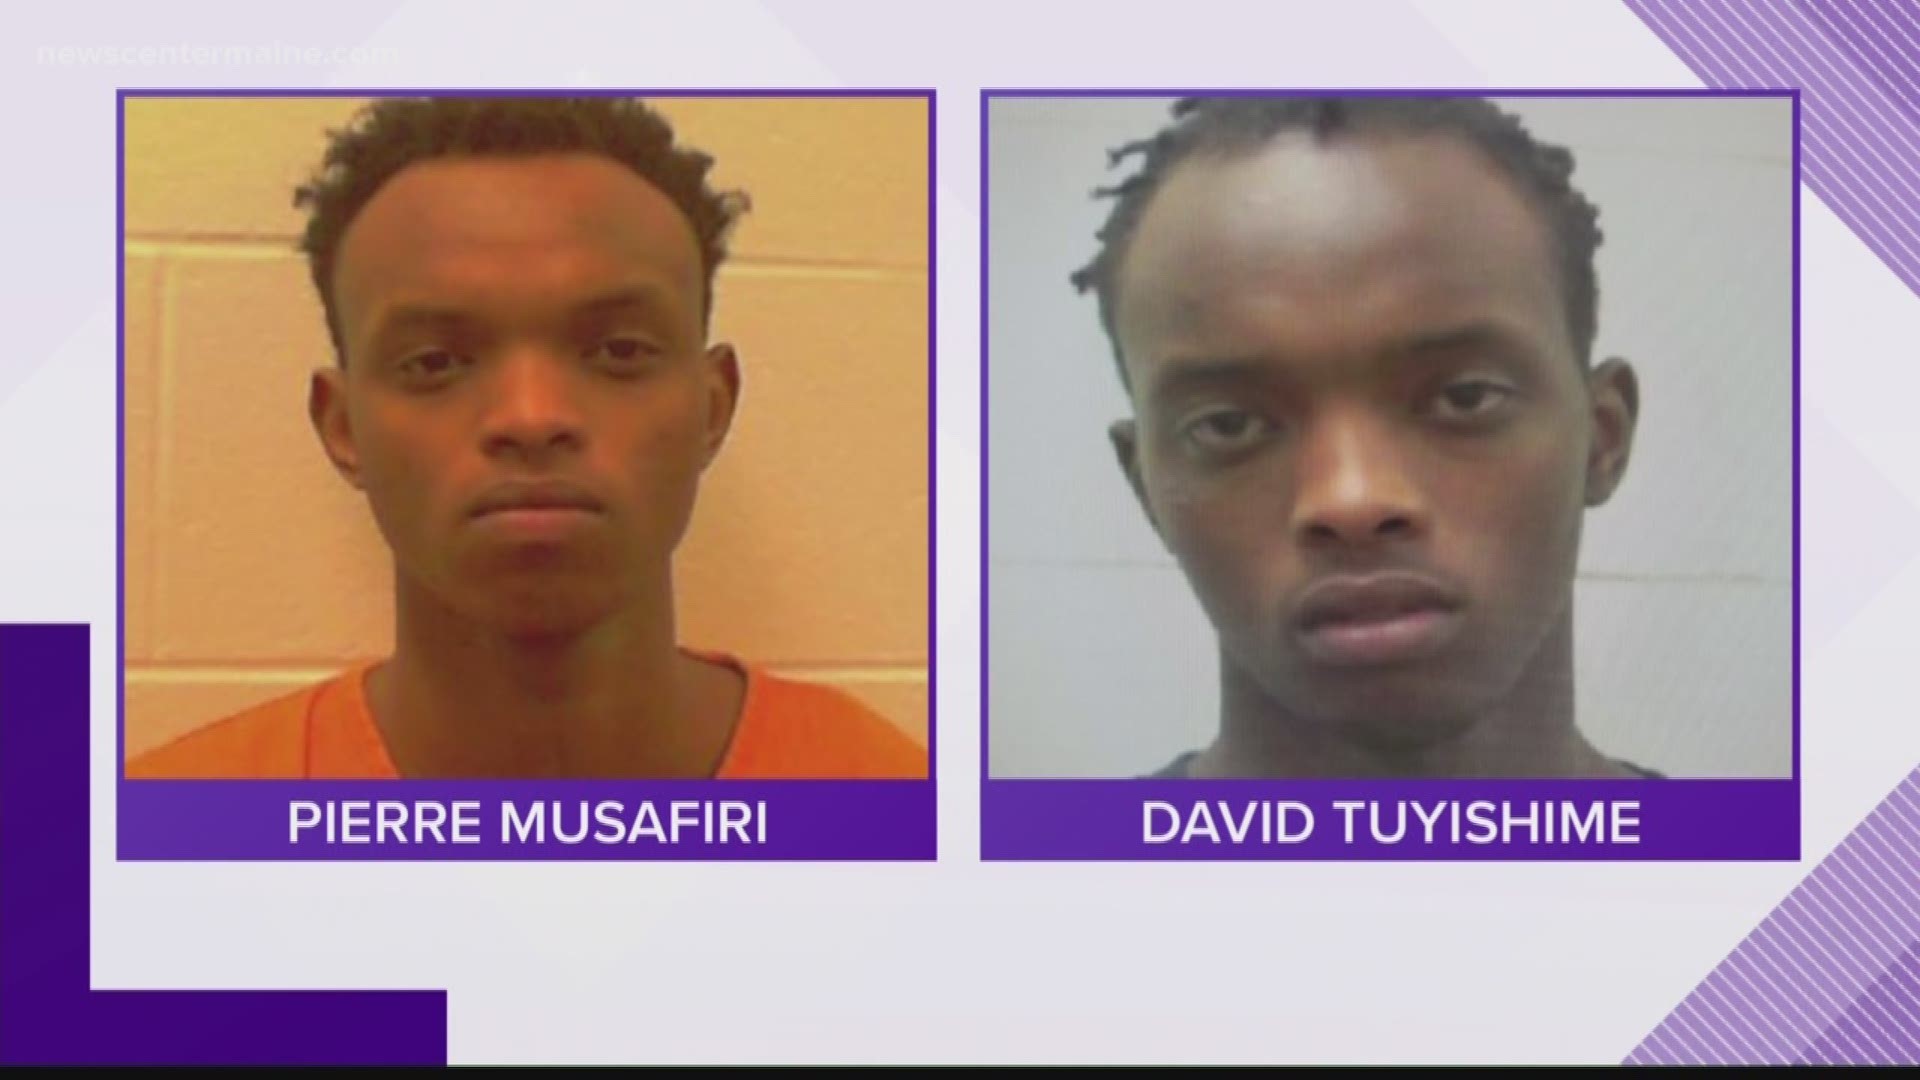 Pierre Musafiri and David Tuyishime were both part of a Lewiston brawl last summer that left Donald Giusti dead.